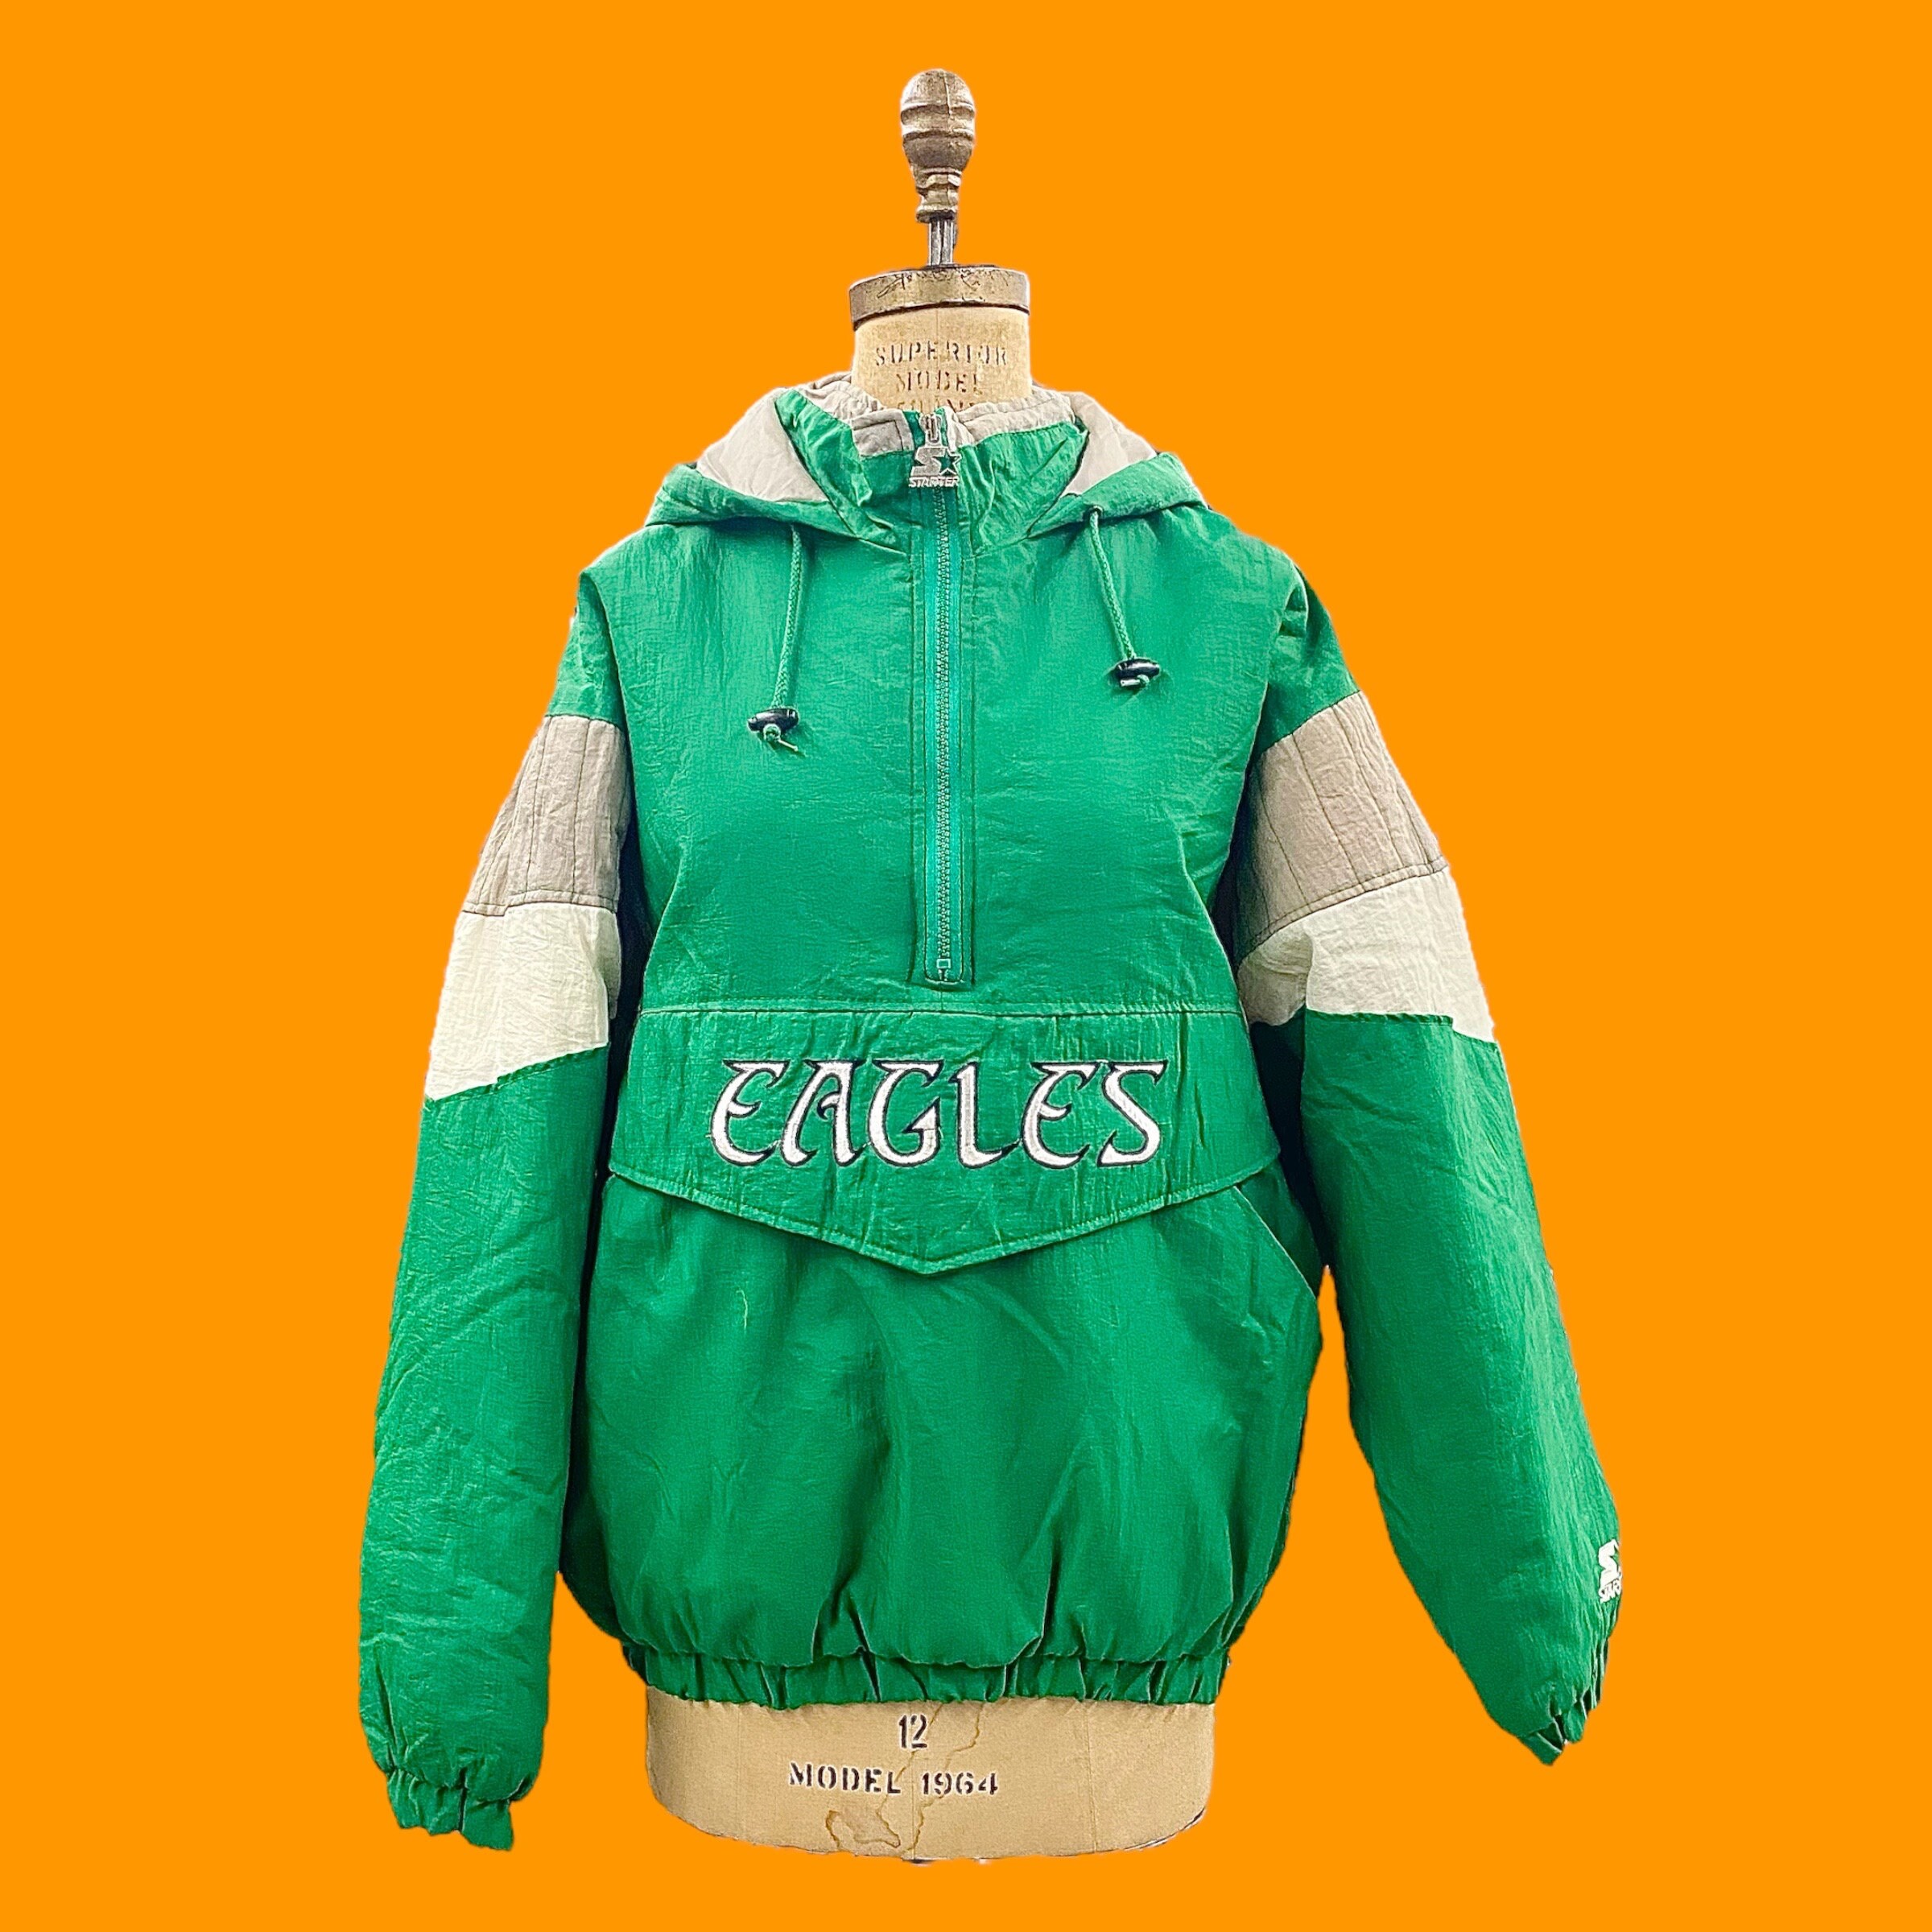 Cease & Desist Clothing Renegades Green Letterman Jacket XL